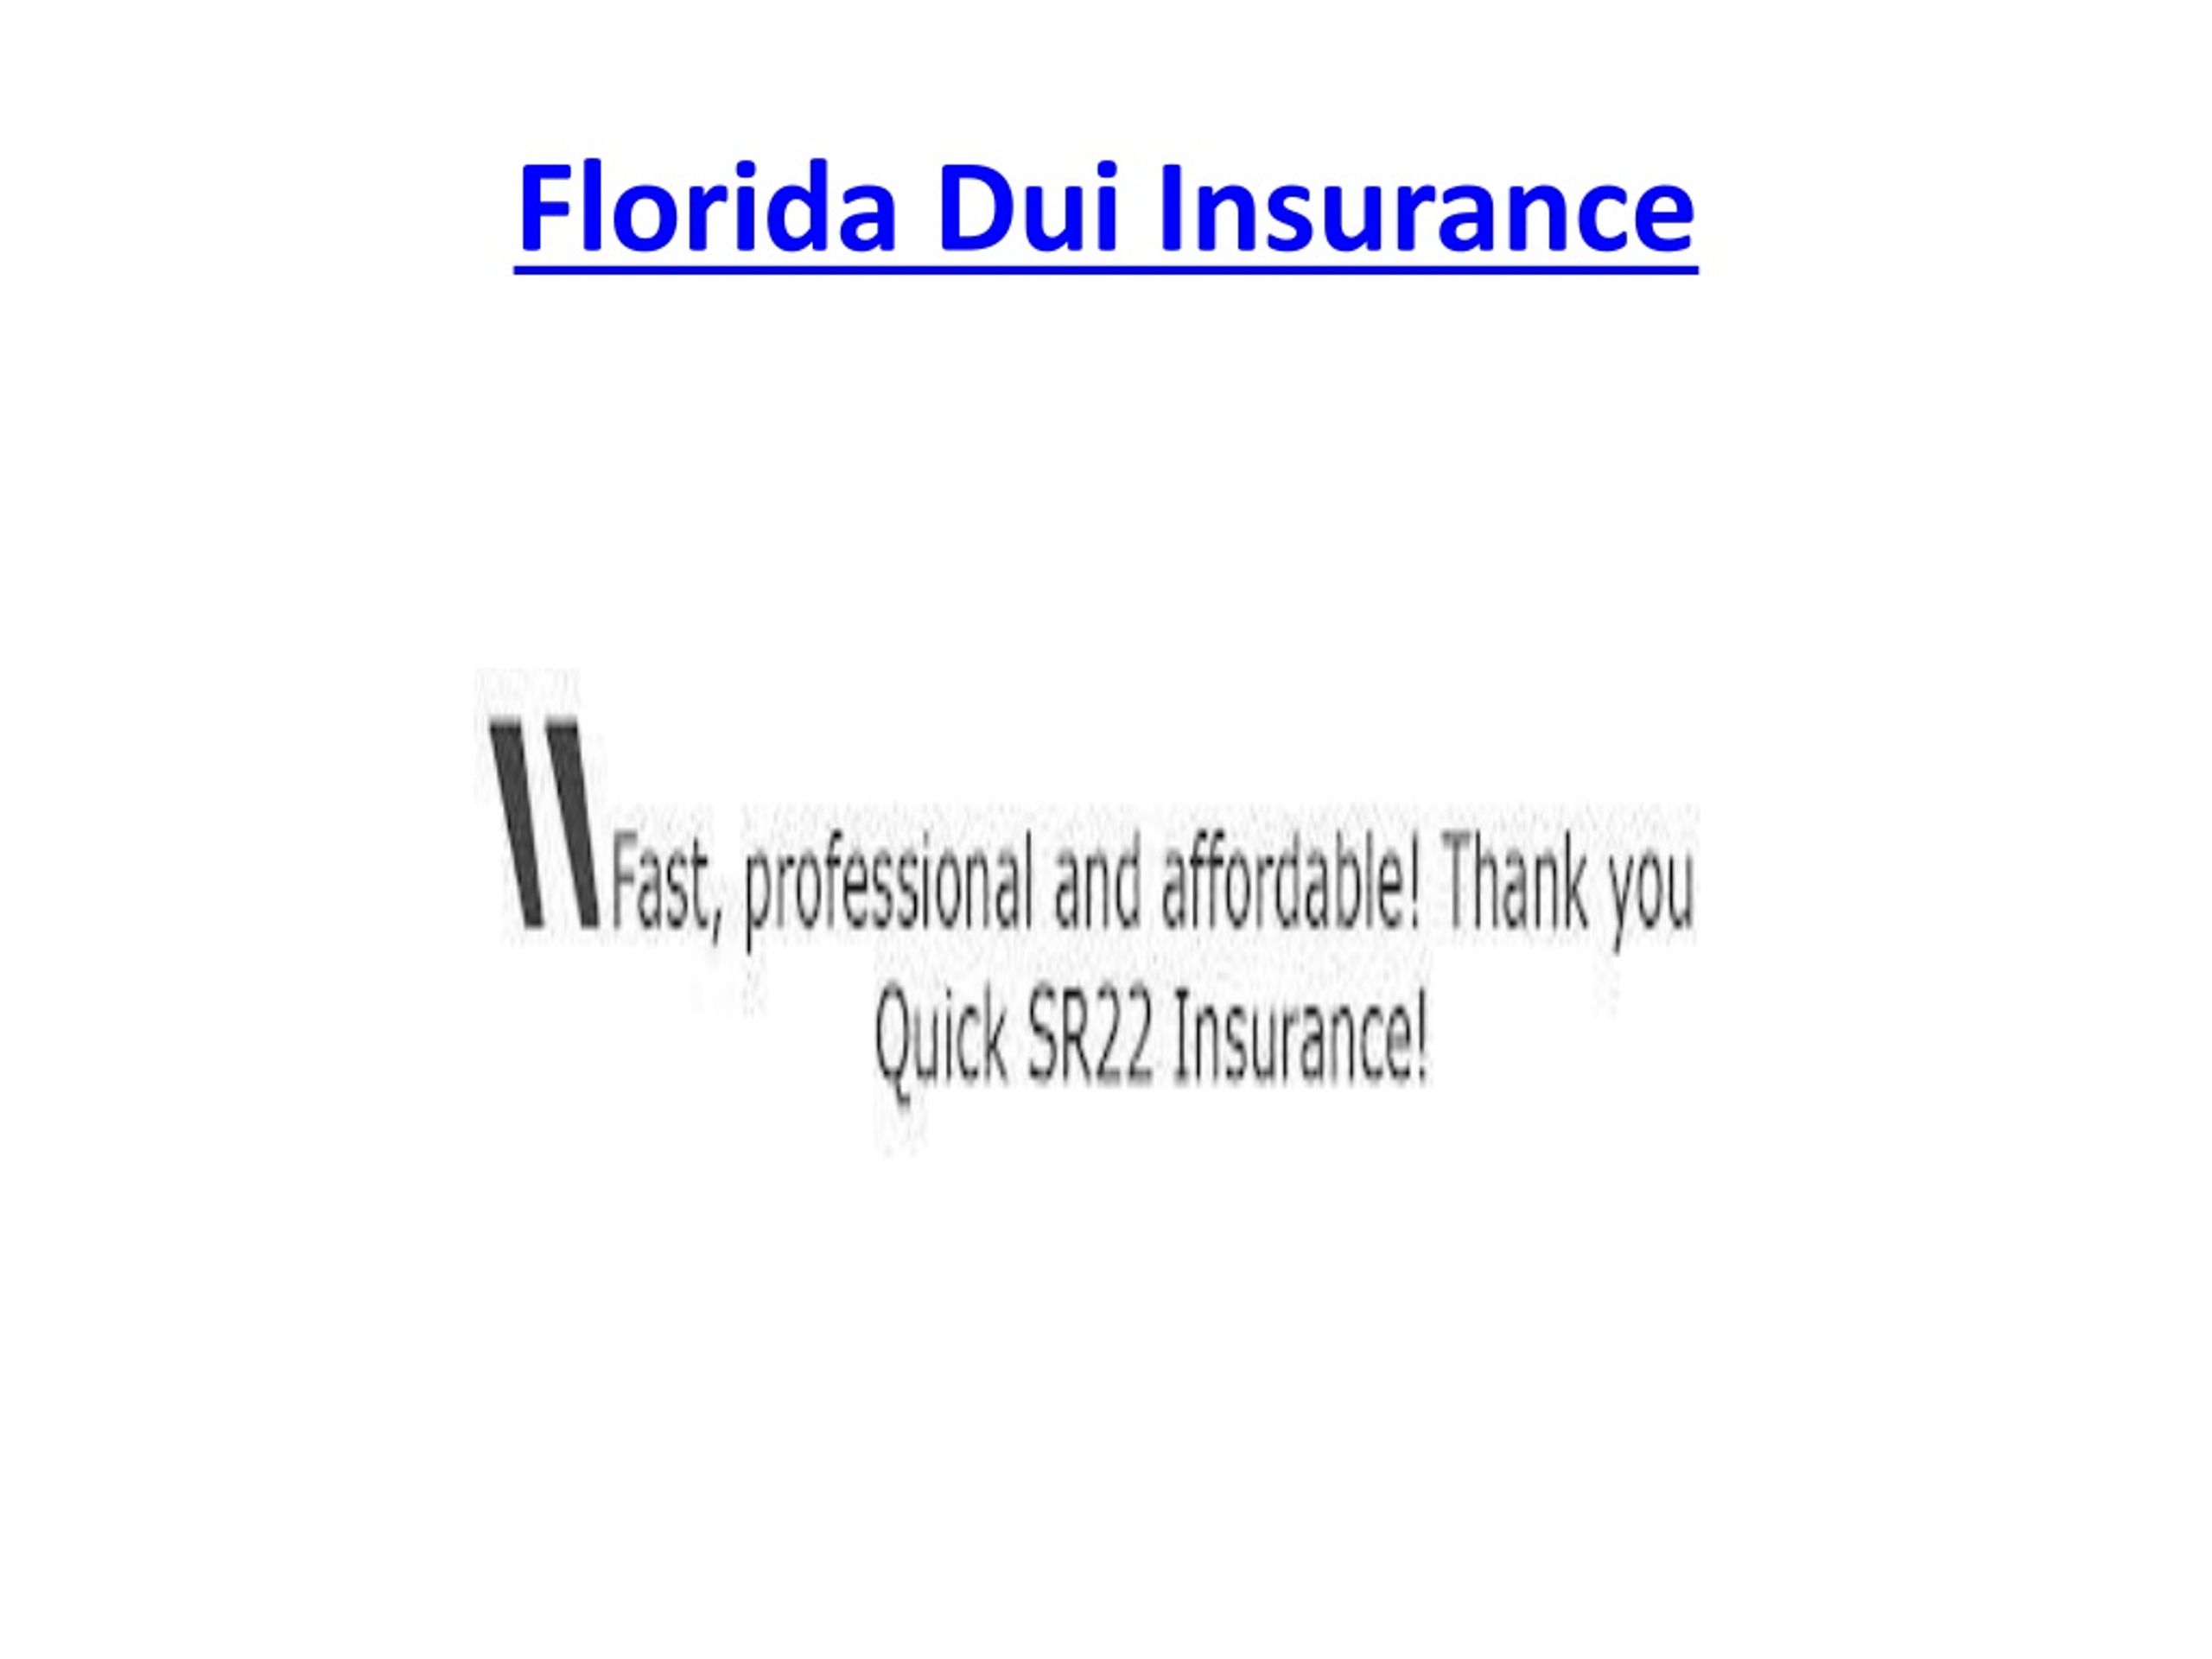 Dui insurance florida information